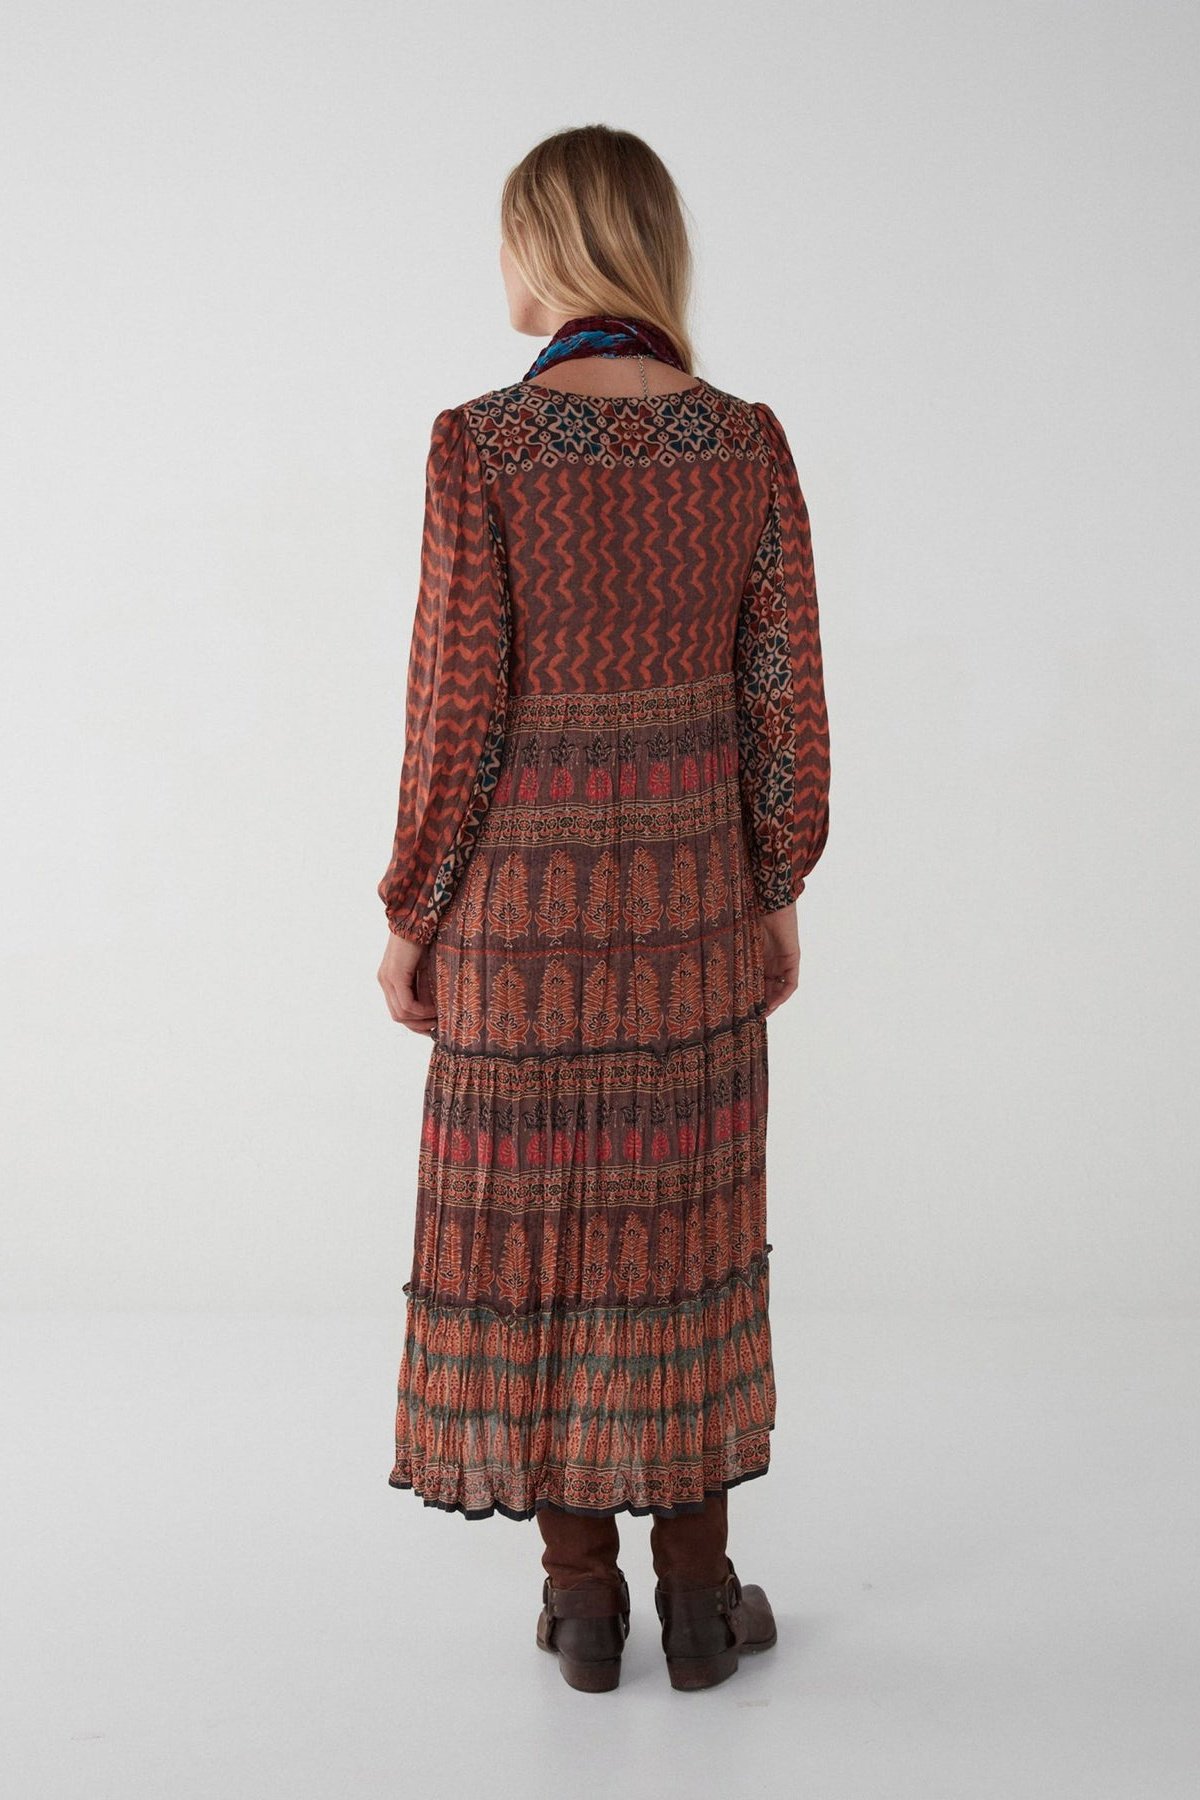 Marwari Meenu Dress - Patch-8